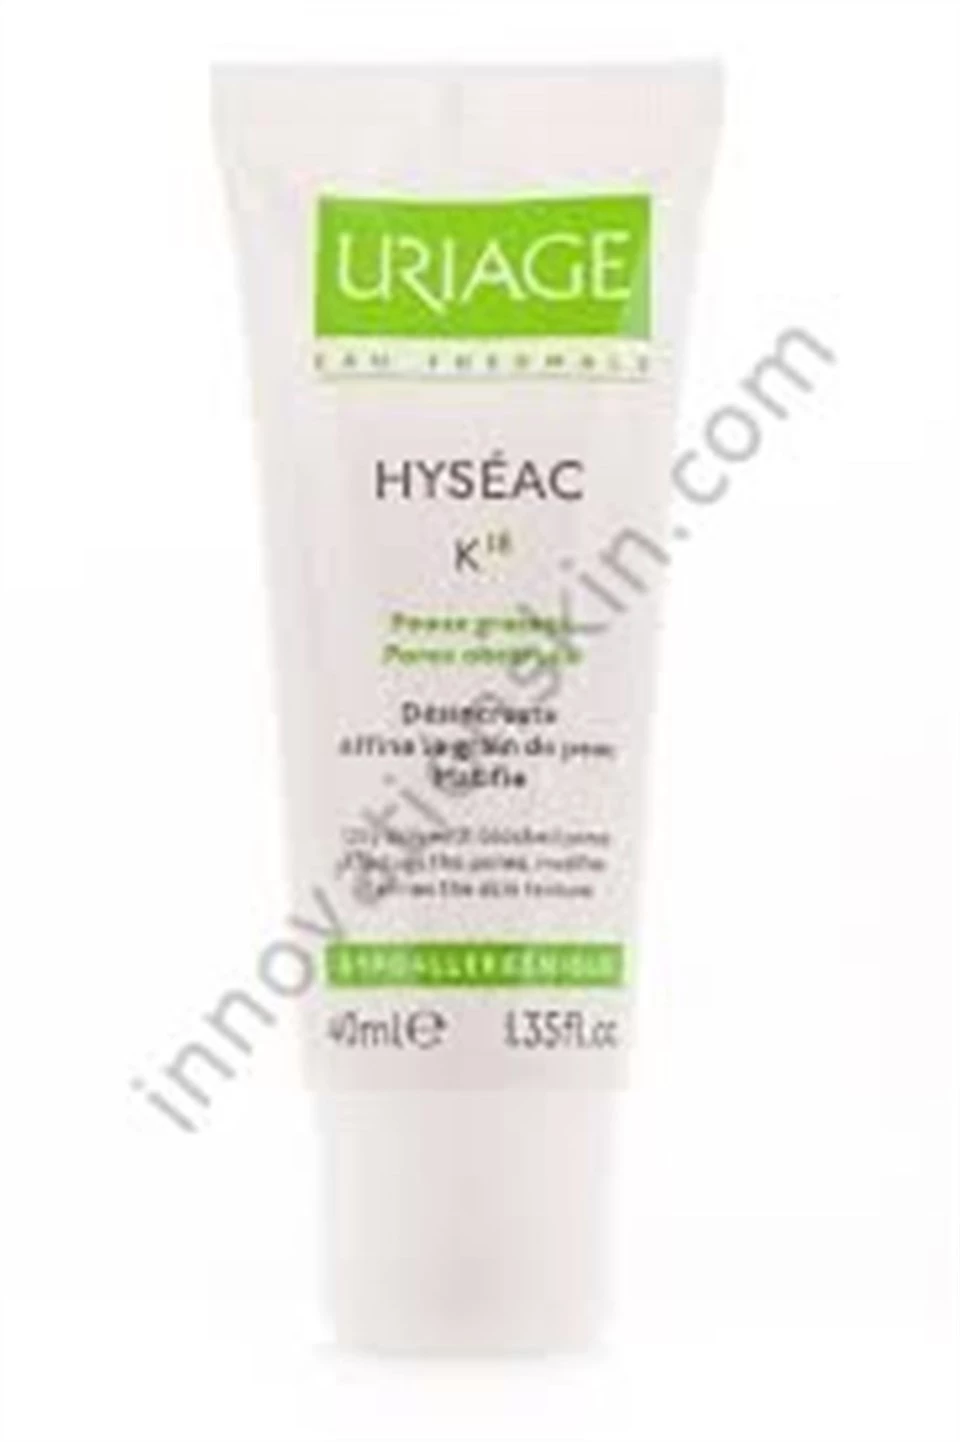 Uriage Hyseac K18 40ml